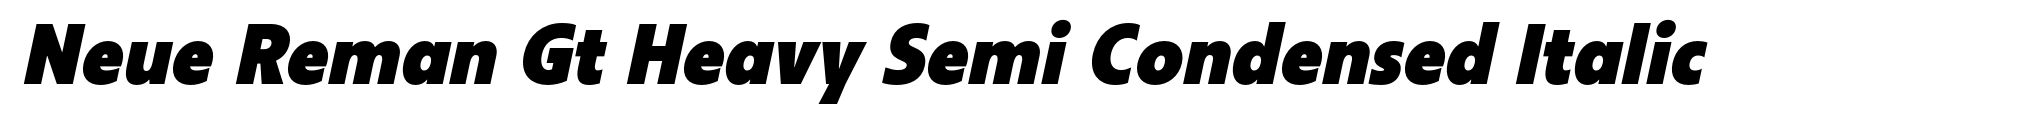 Neue Reman Gt Heavy Semi Condensed Italic image